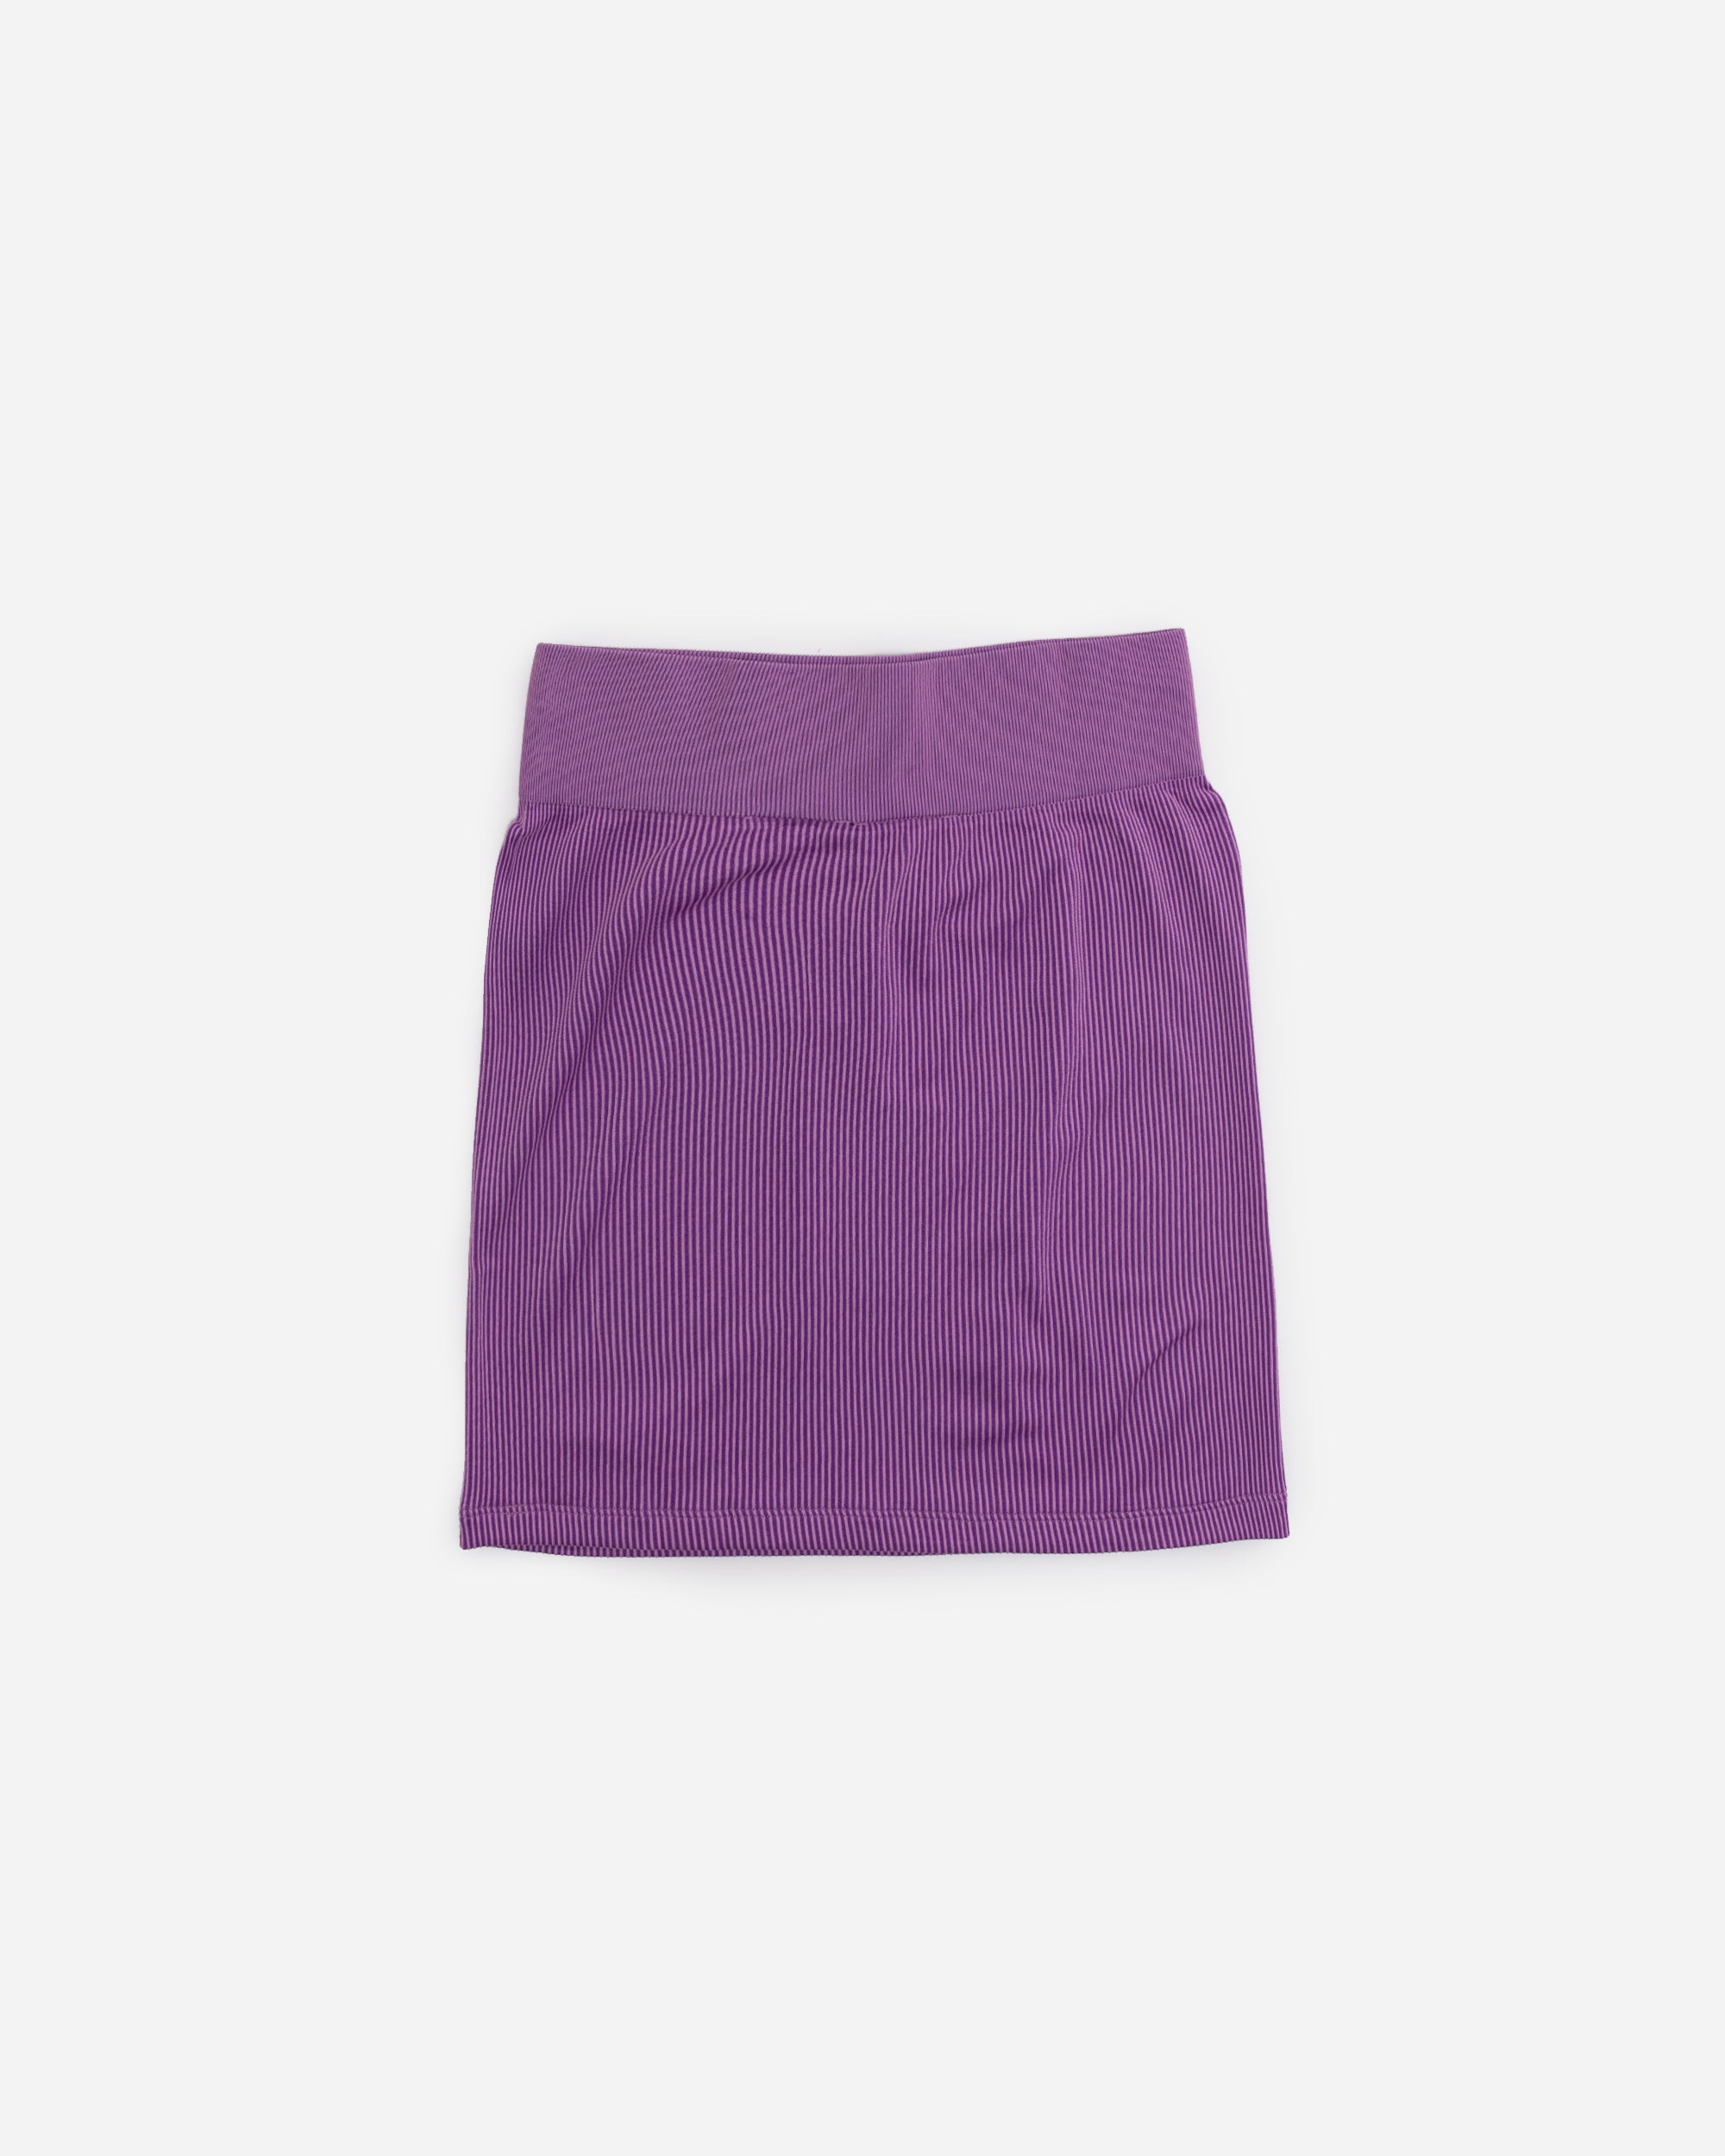 Nike Rib Skirt Violet Shock/White CZ9343-591